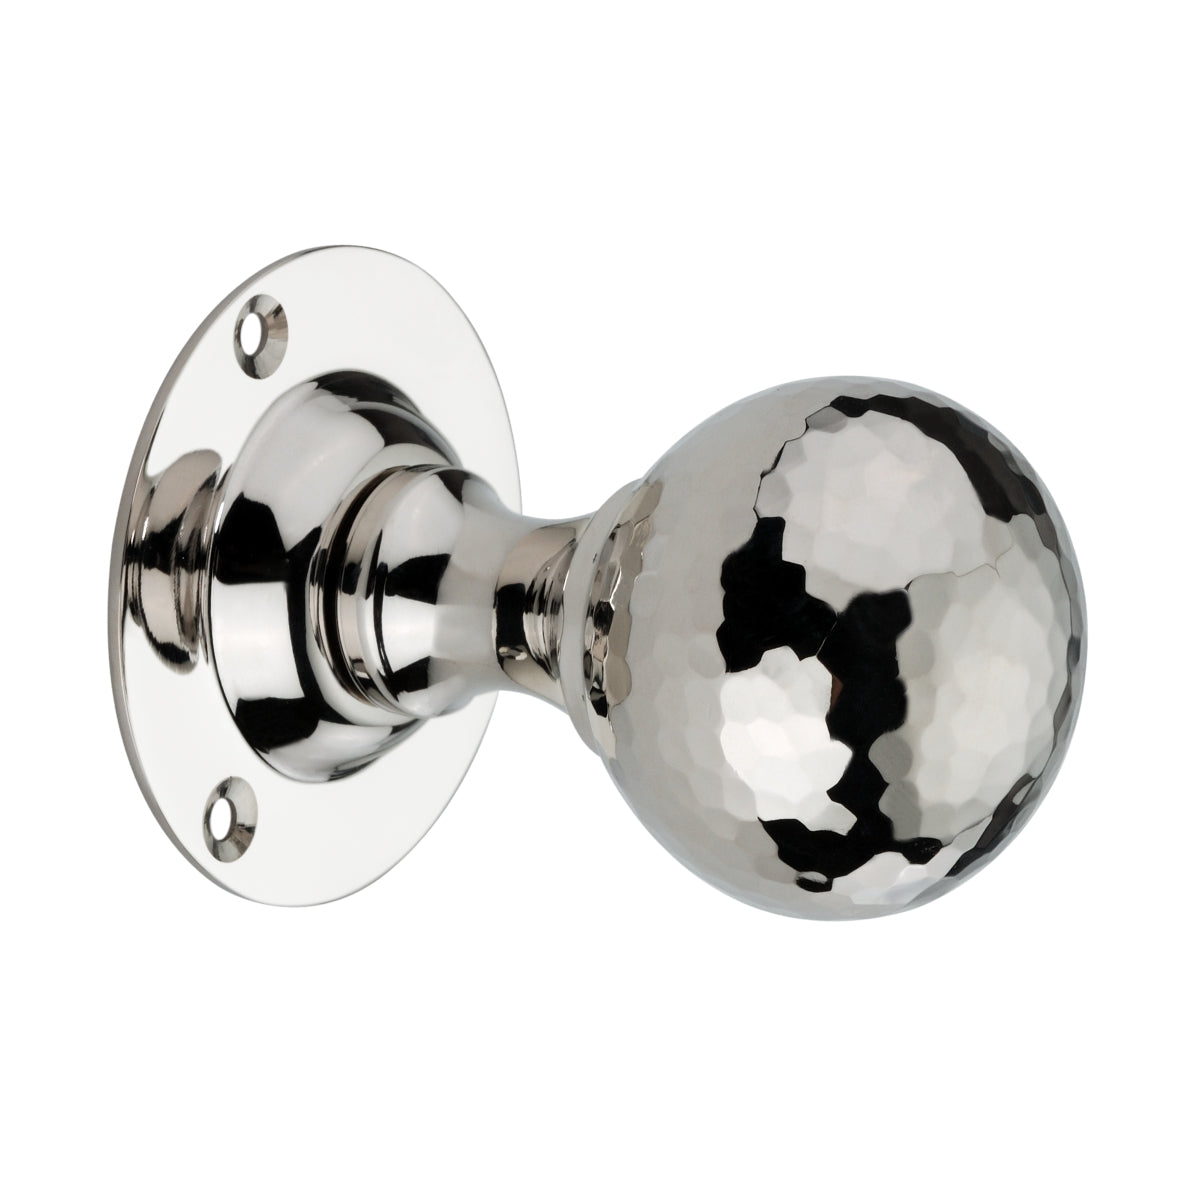 Spira Brass Hammered Ball Mortice Door Knob, Polished Nickel - SB2128PN